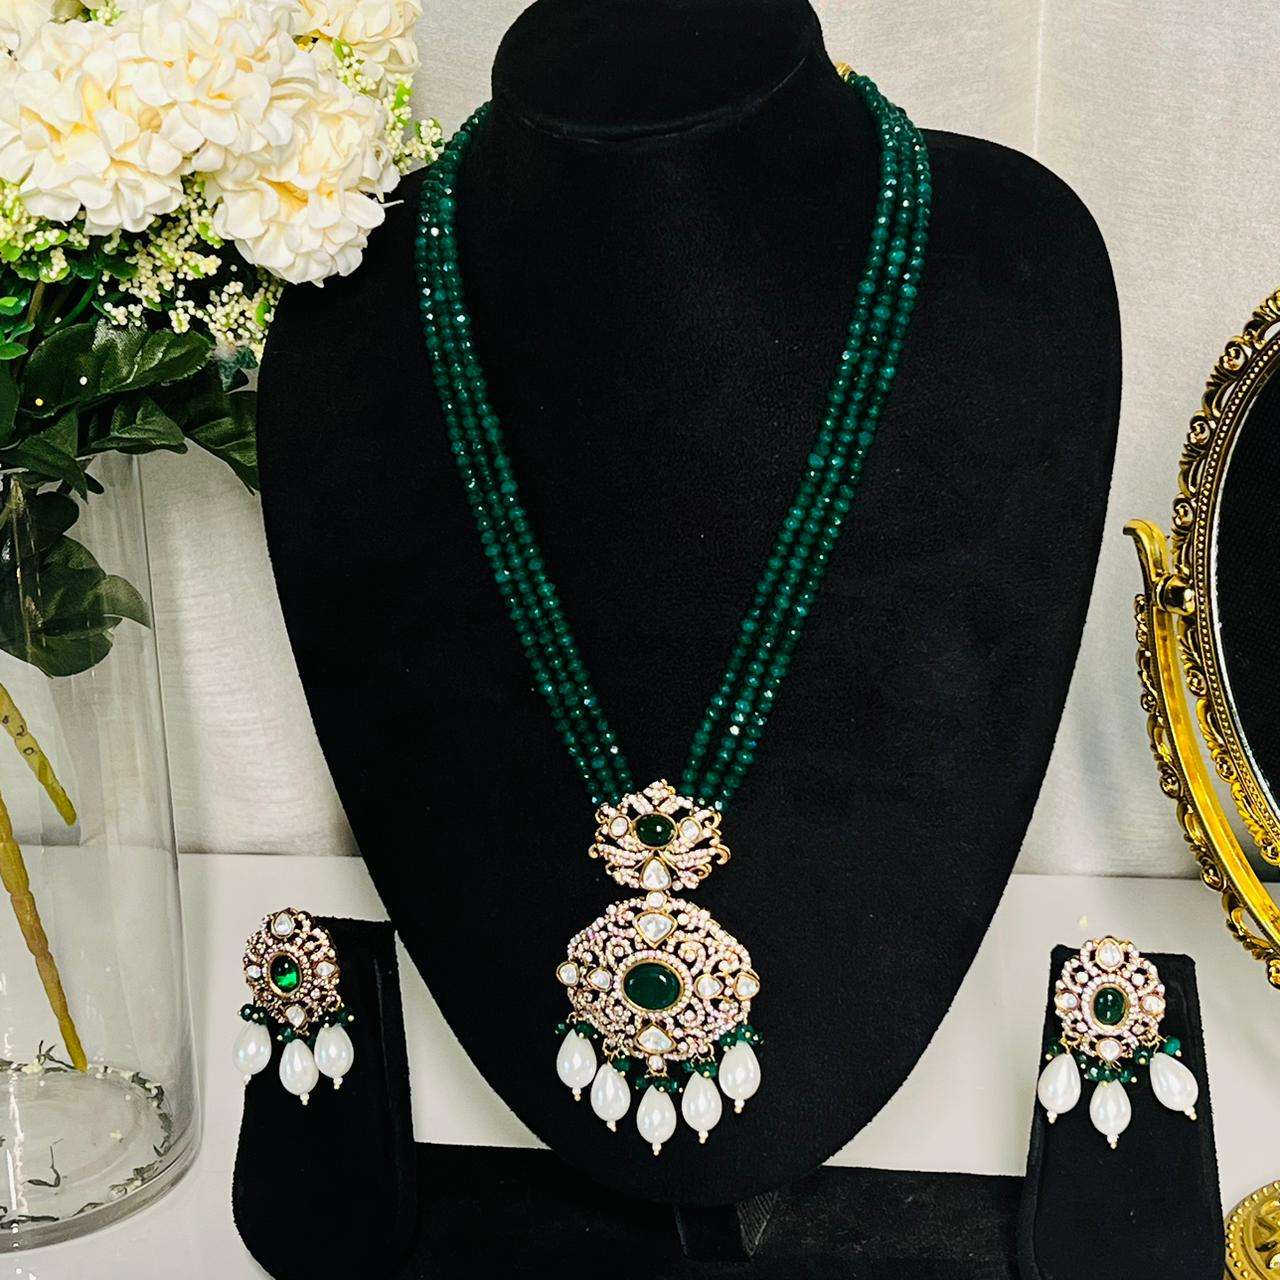 Nayaab ruhani neckpiece velvet box by shweta